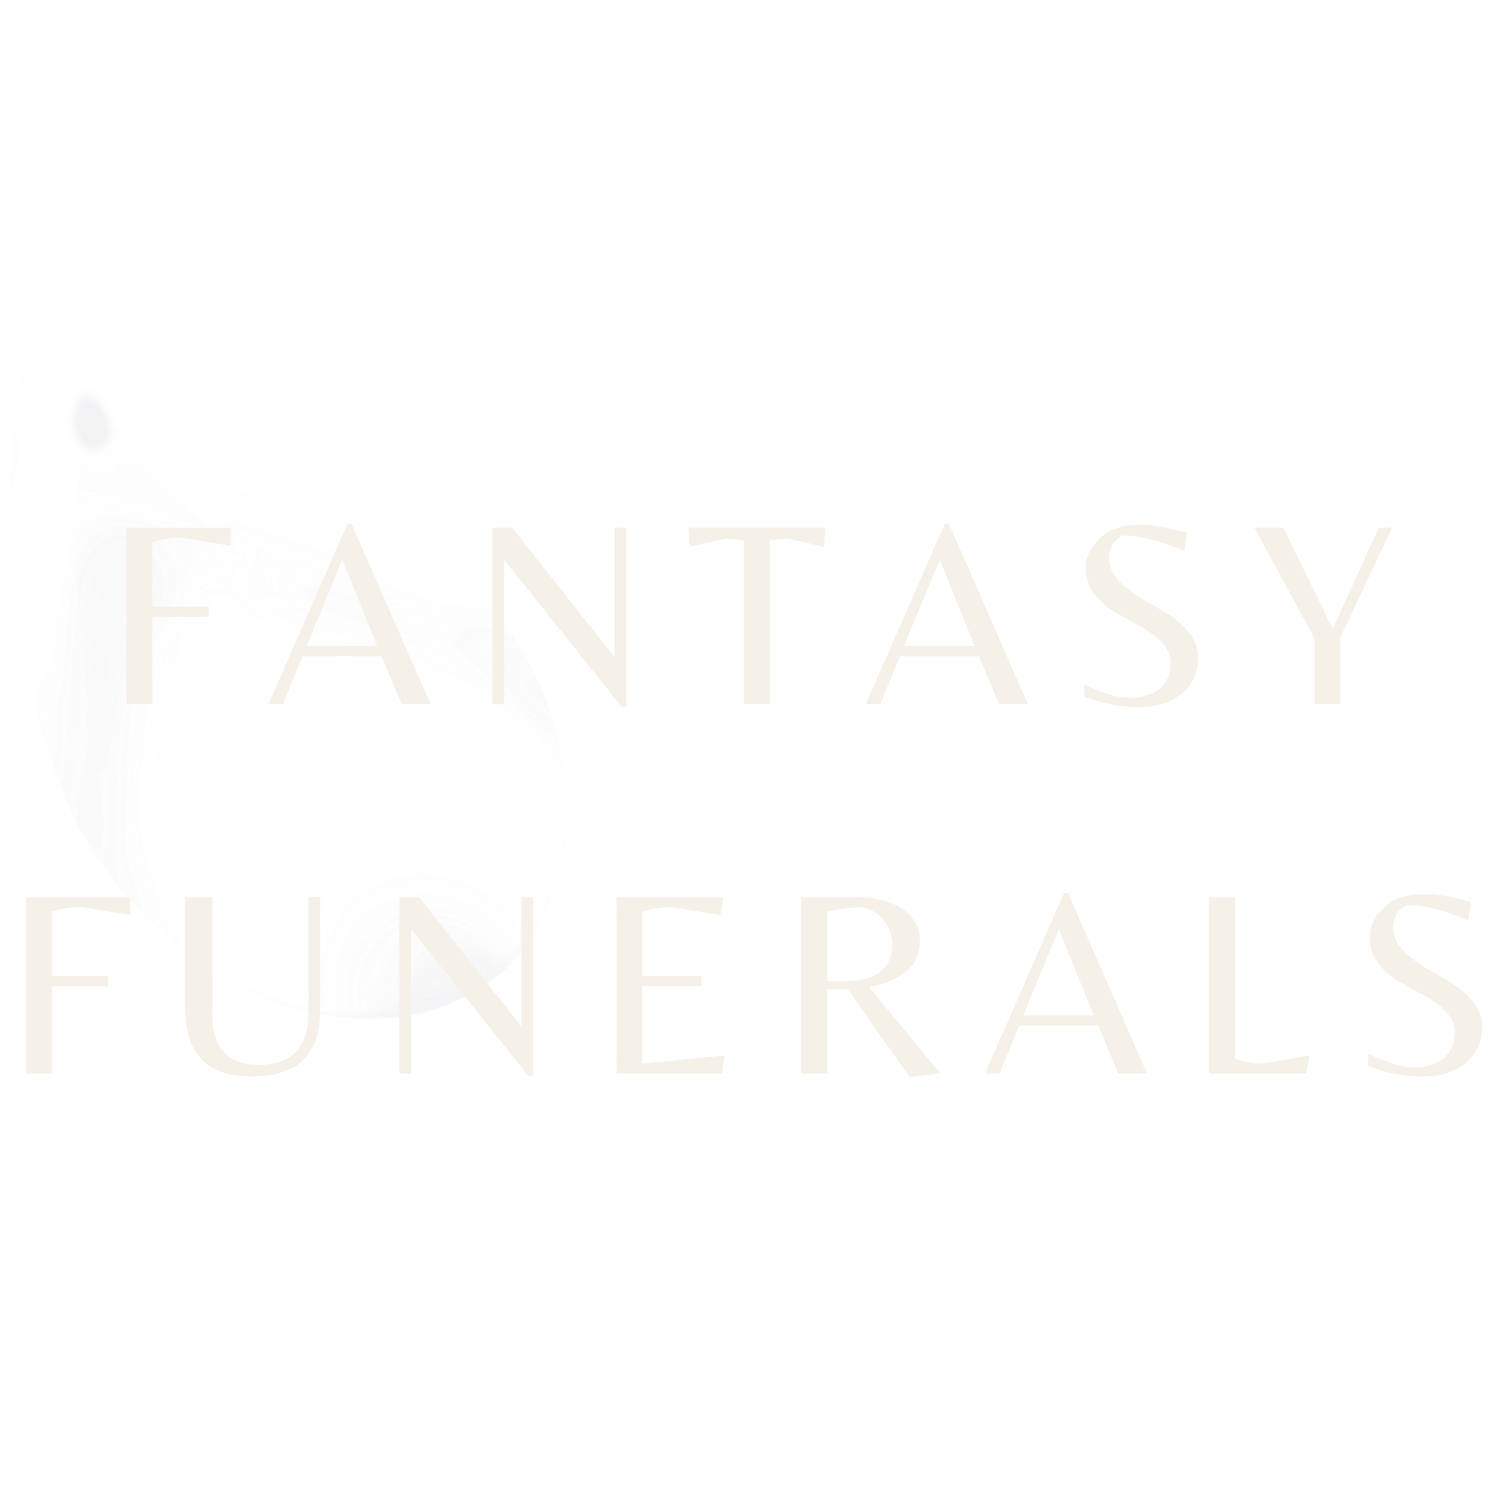 Fantasy Funerals